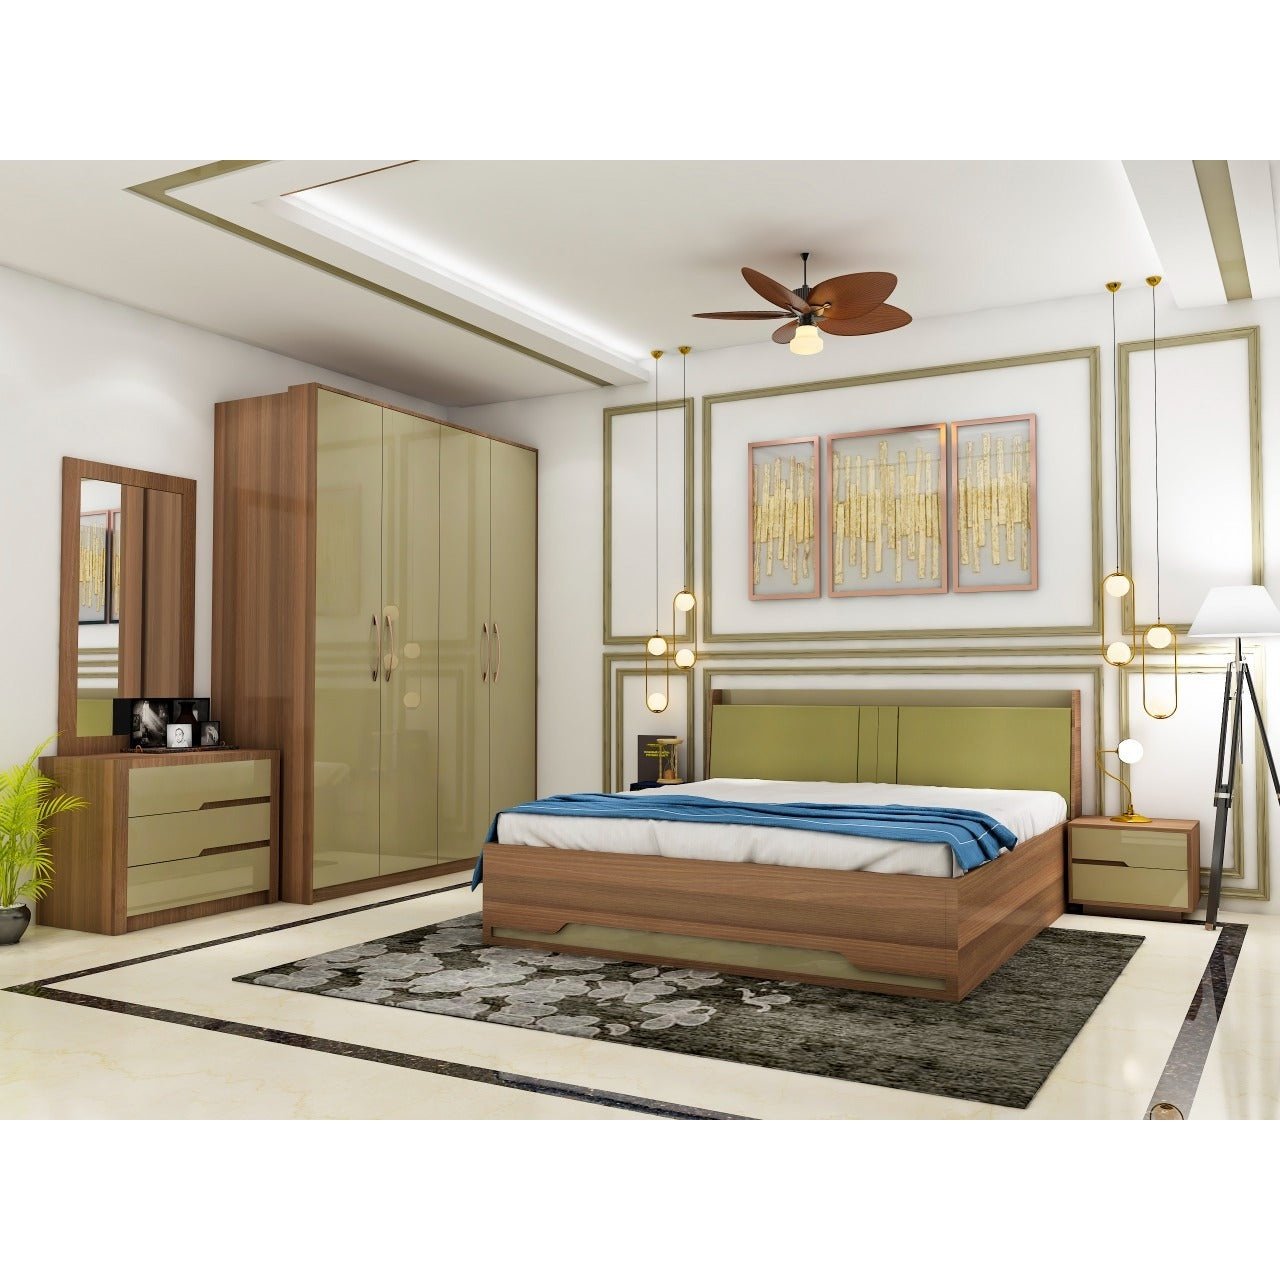 UW-2717,OLIVE GREEN BED ROOM PACKAGE Mobel Furniture